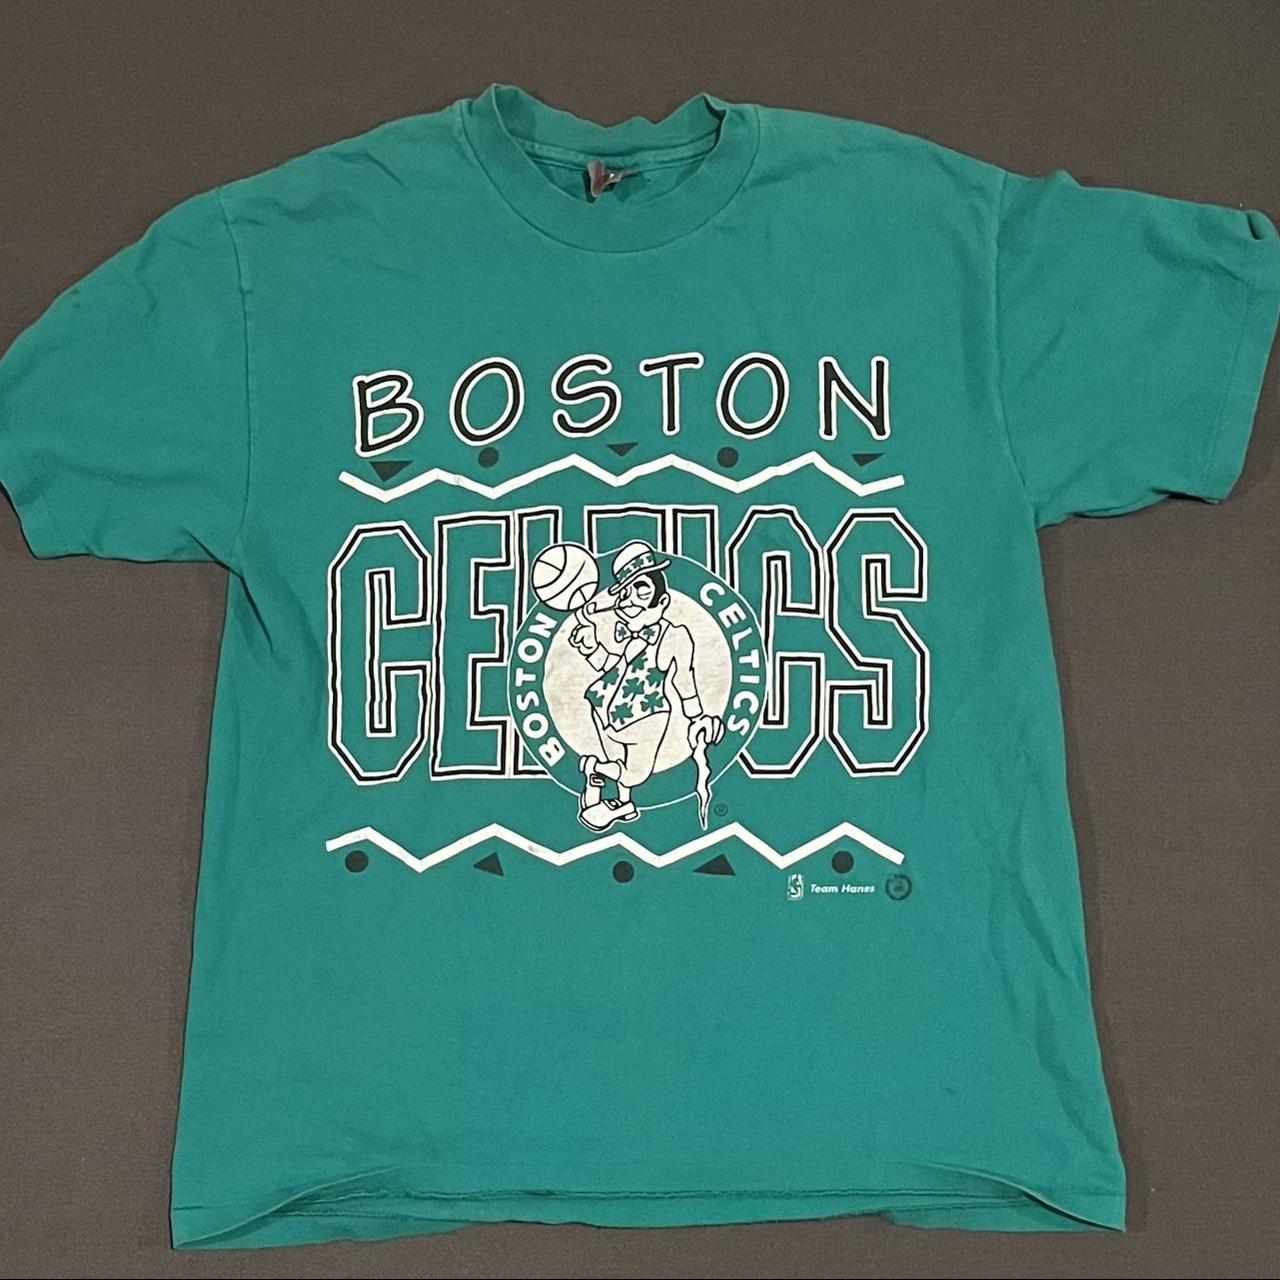 Men's Boston Celtics Graphic Tee, Men's Tops